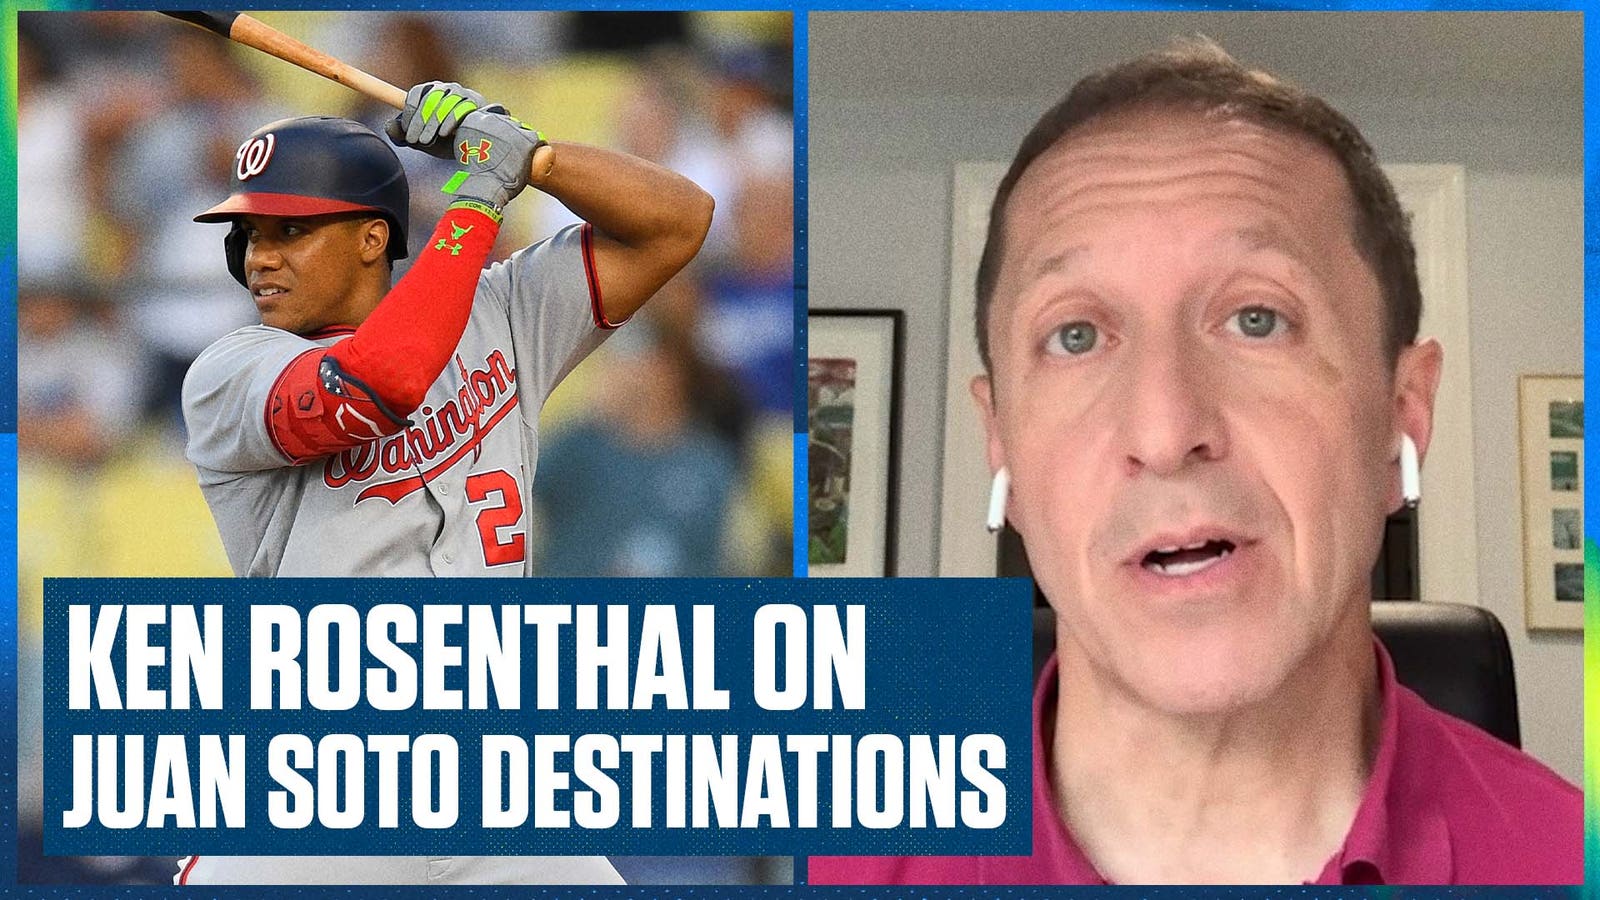 Ken Rosenthal on Juan Soto destinations: Yankees, Cardinals, Padres